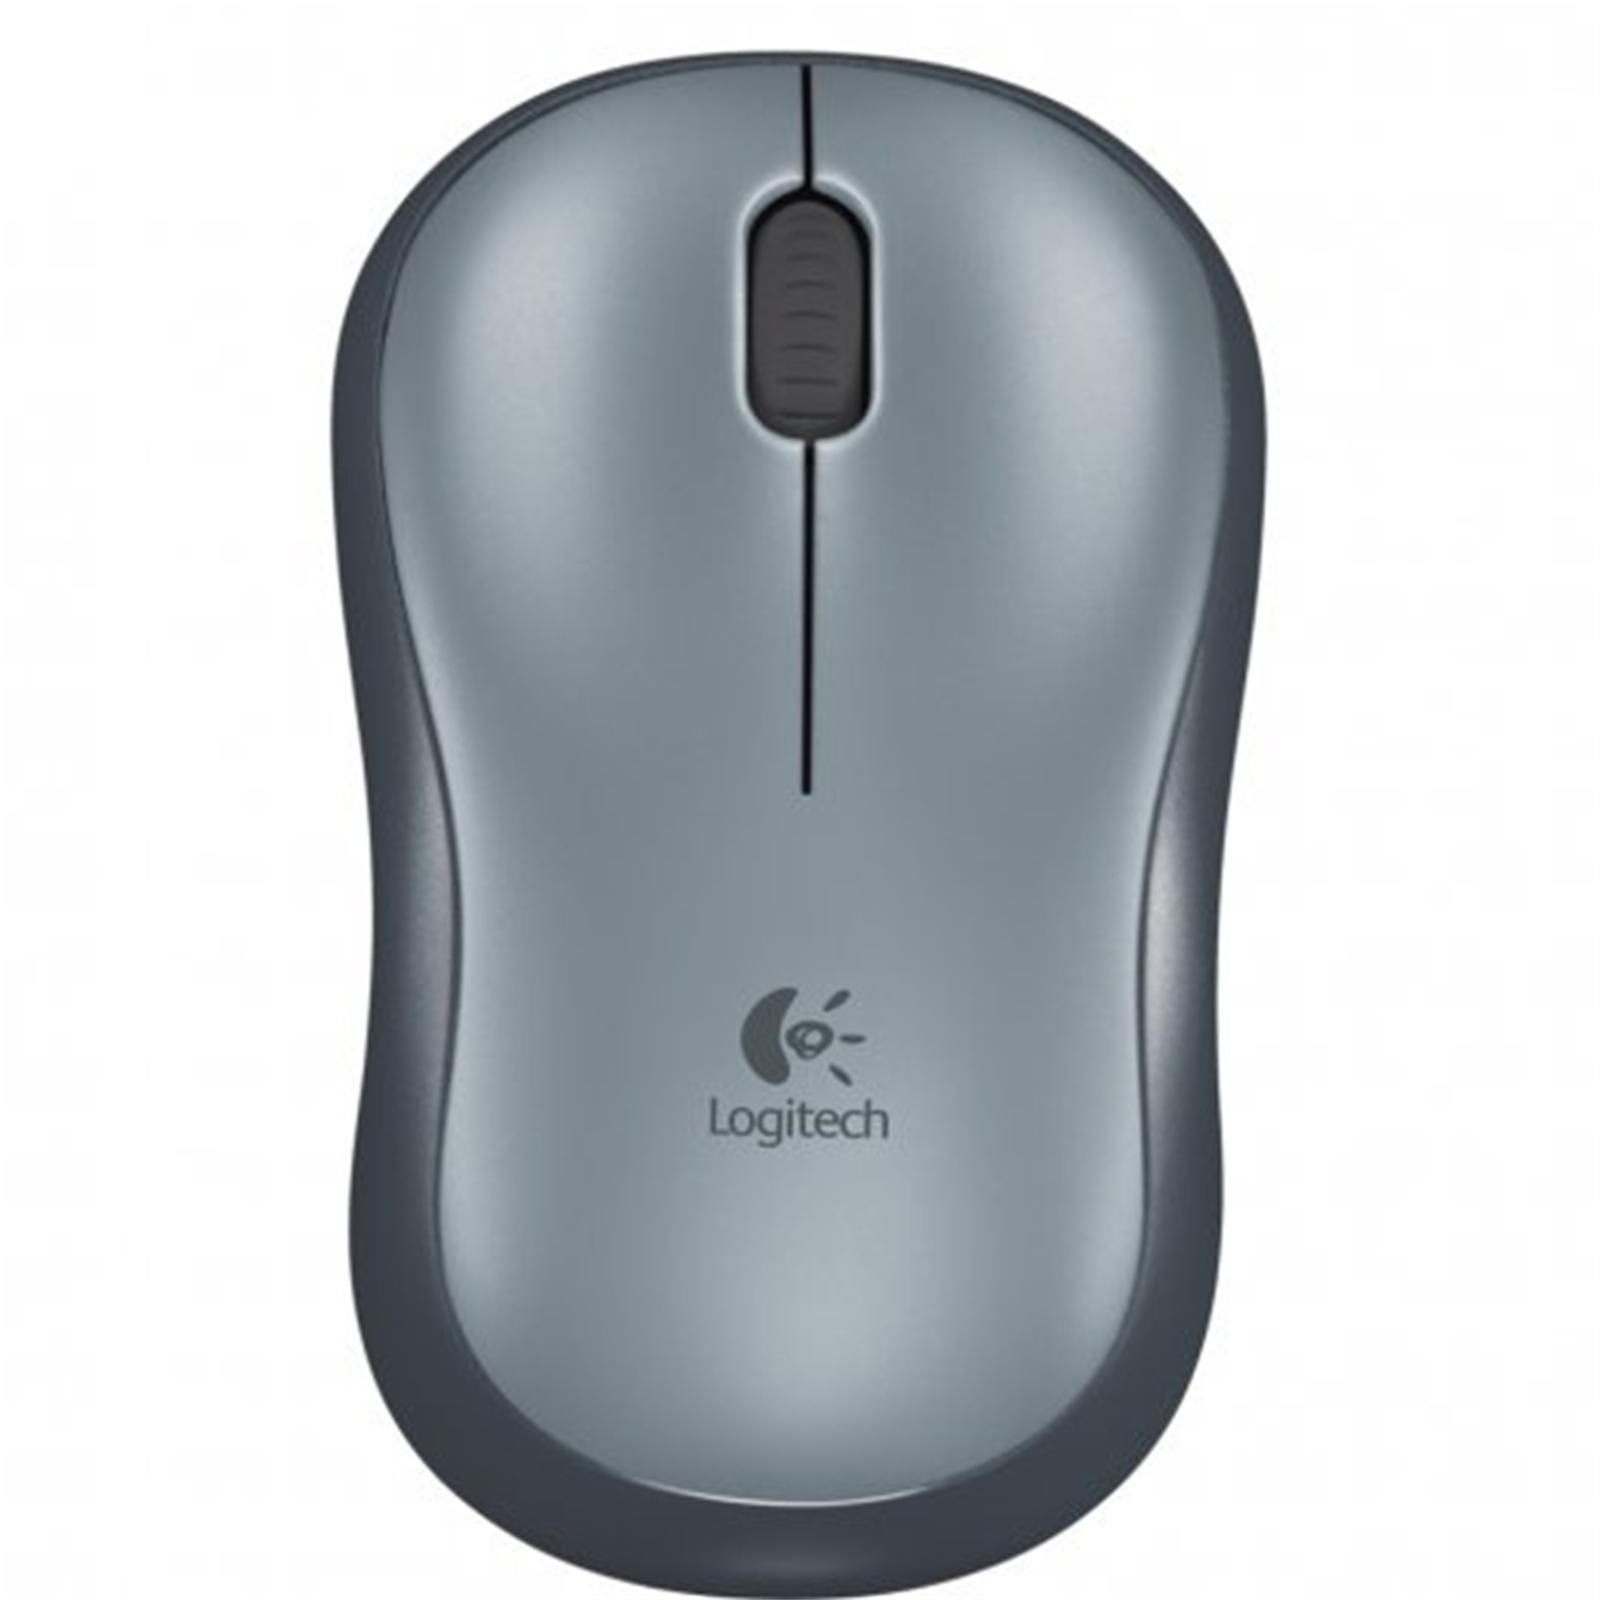 Logitech Wireless mouse m185 grey with nano receiver _910-002235